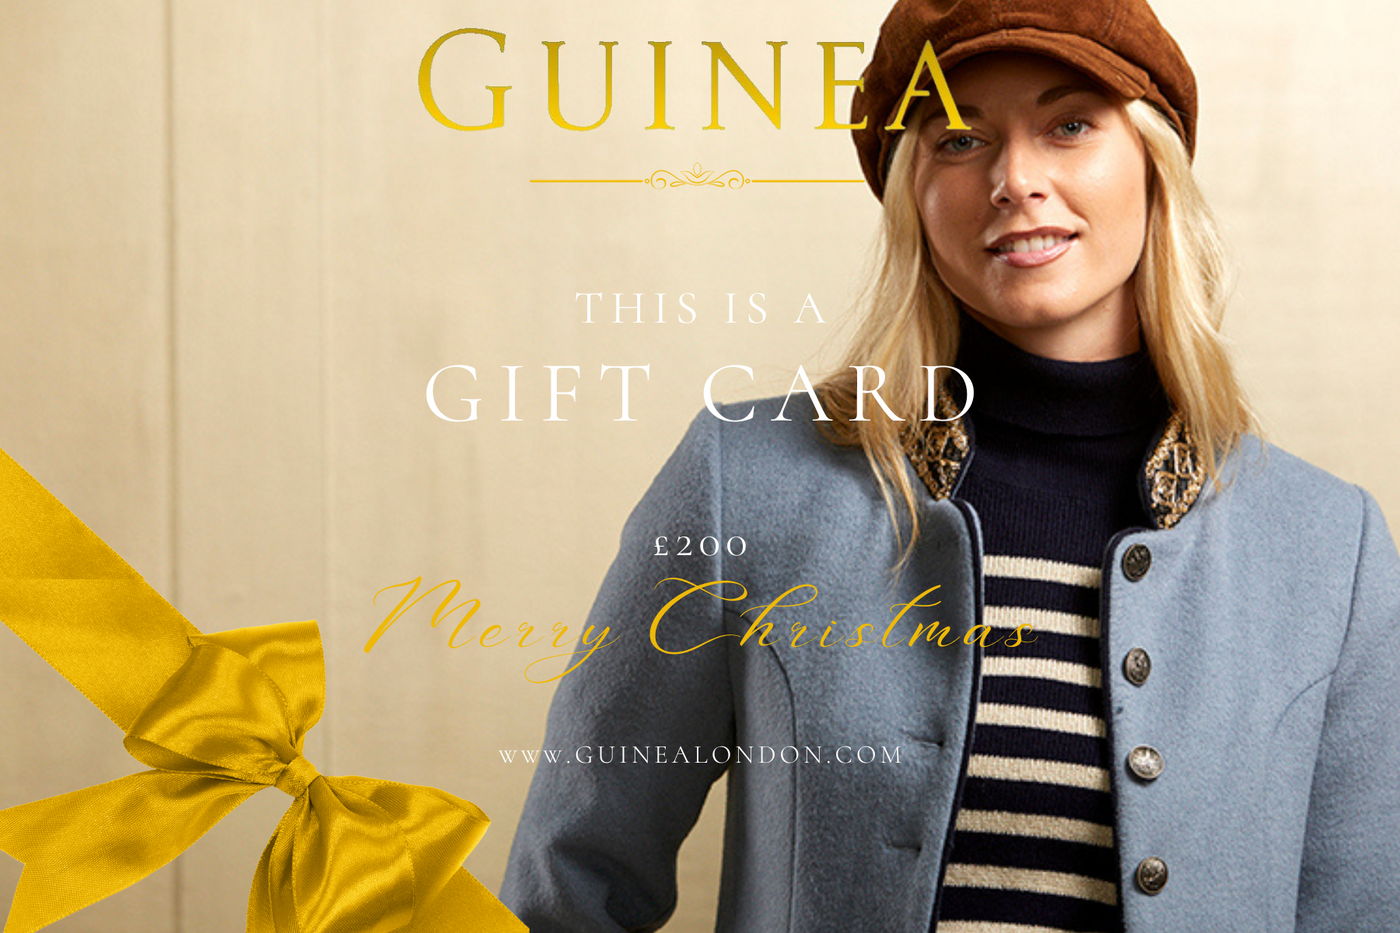 Guinea Gift Card - £200